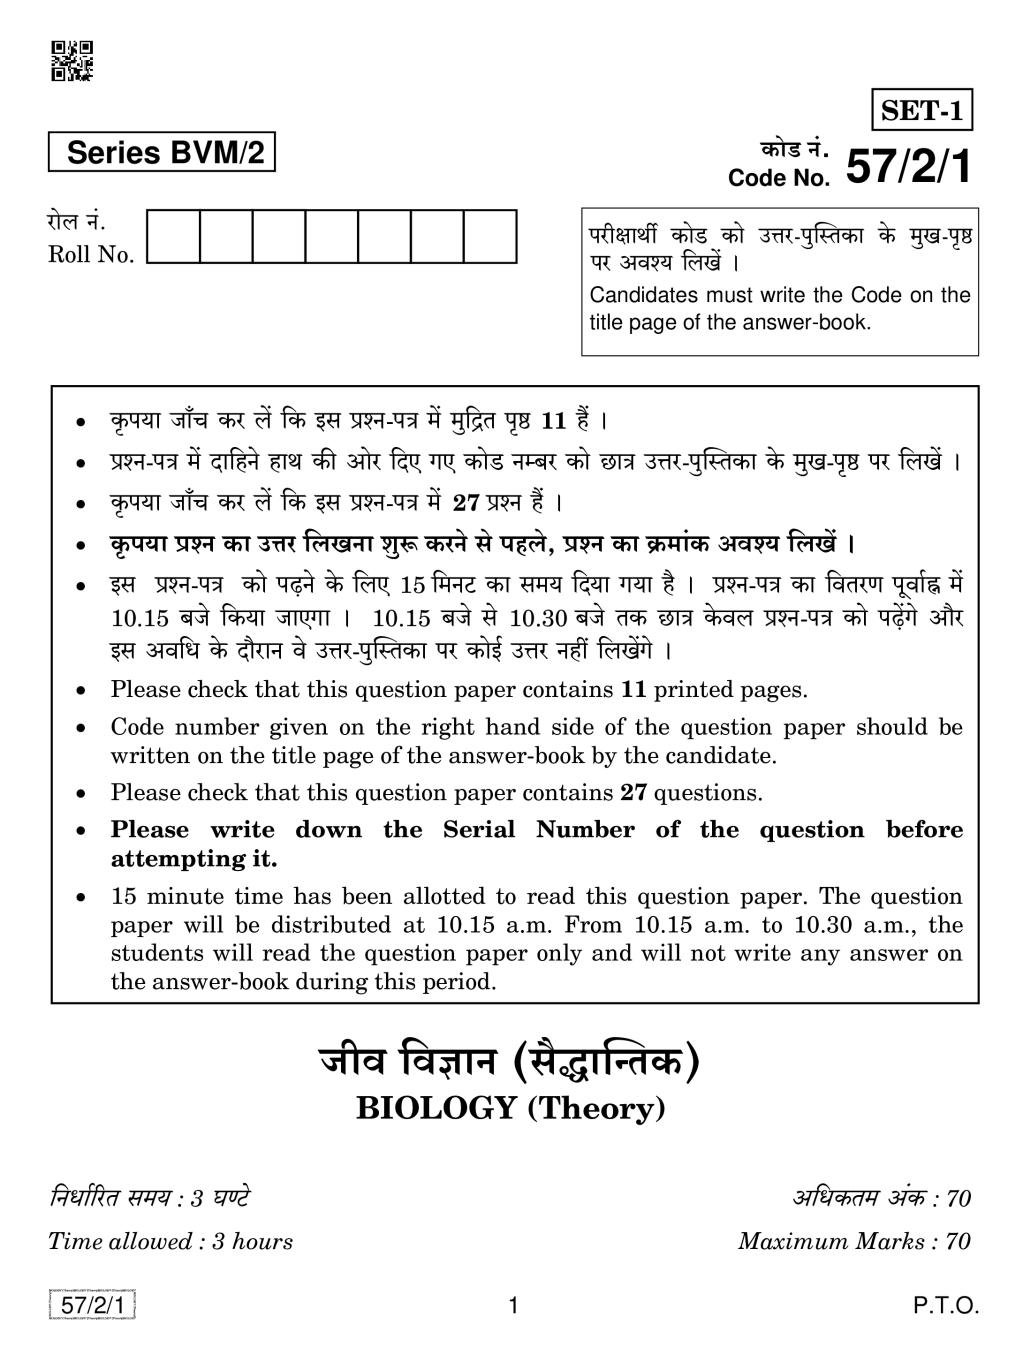 CBSE Class 12 Biology Question Paper 2019 Set 2 - Page 1